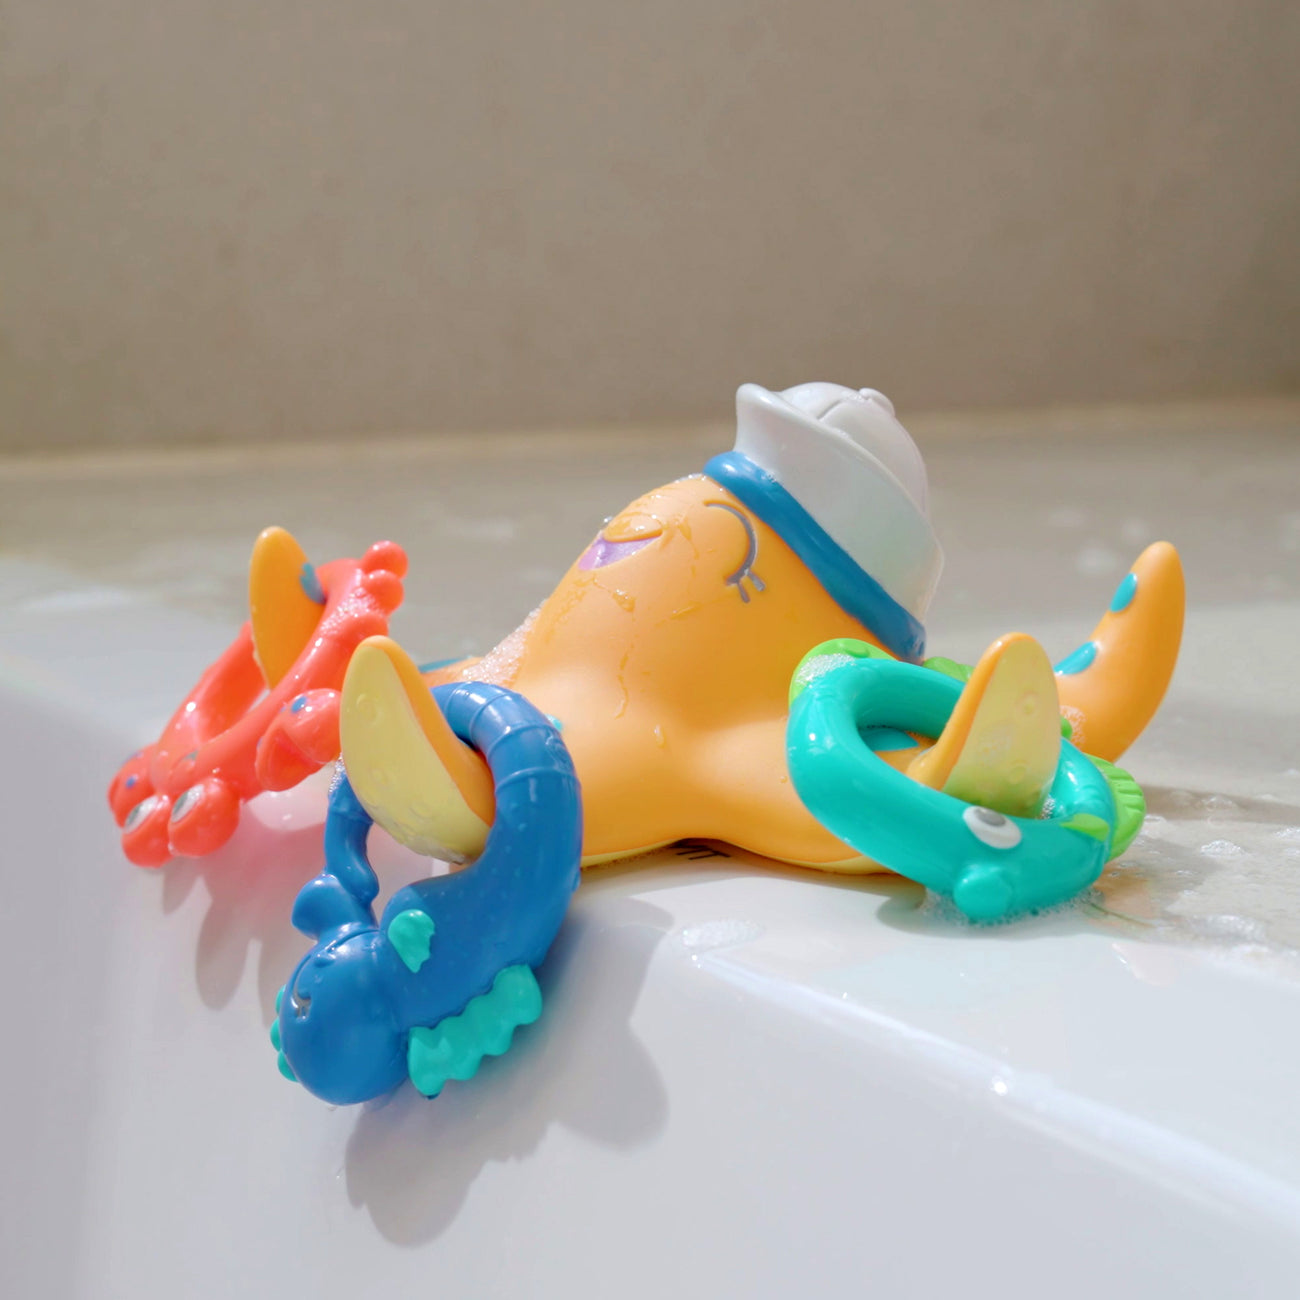 Starfish Ring Toss Bath Toy